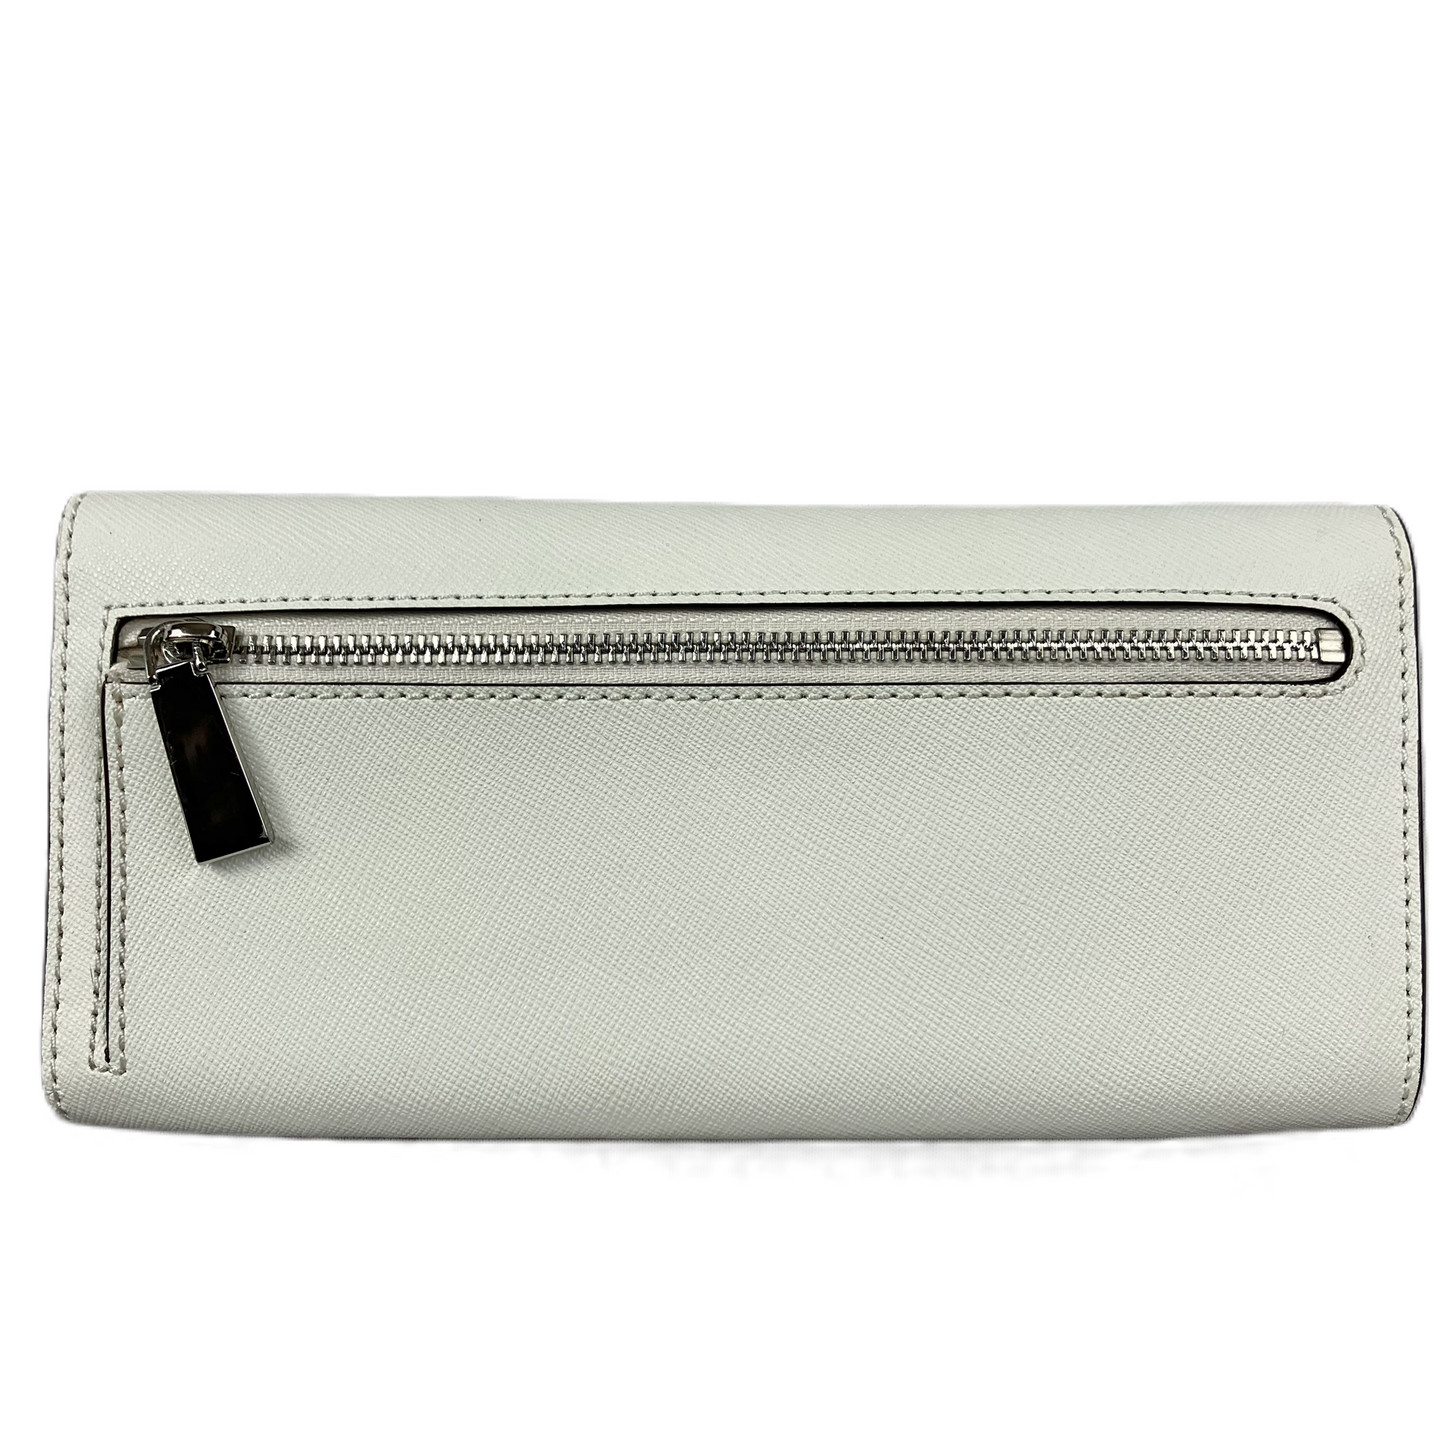 Wallet By Michael Kors, Size: Medium